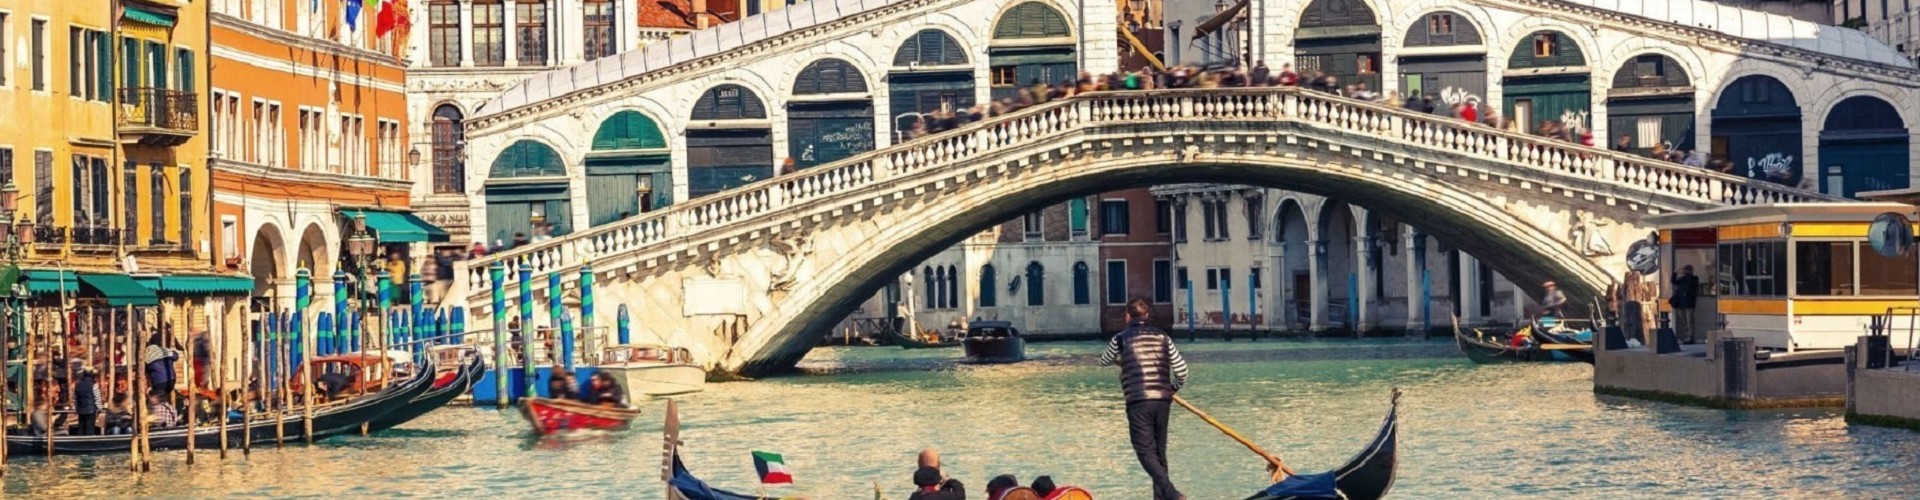 Venice Walking Tour with Gondola Ride | Transportation from Genoa to Venice